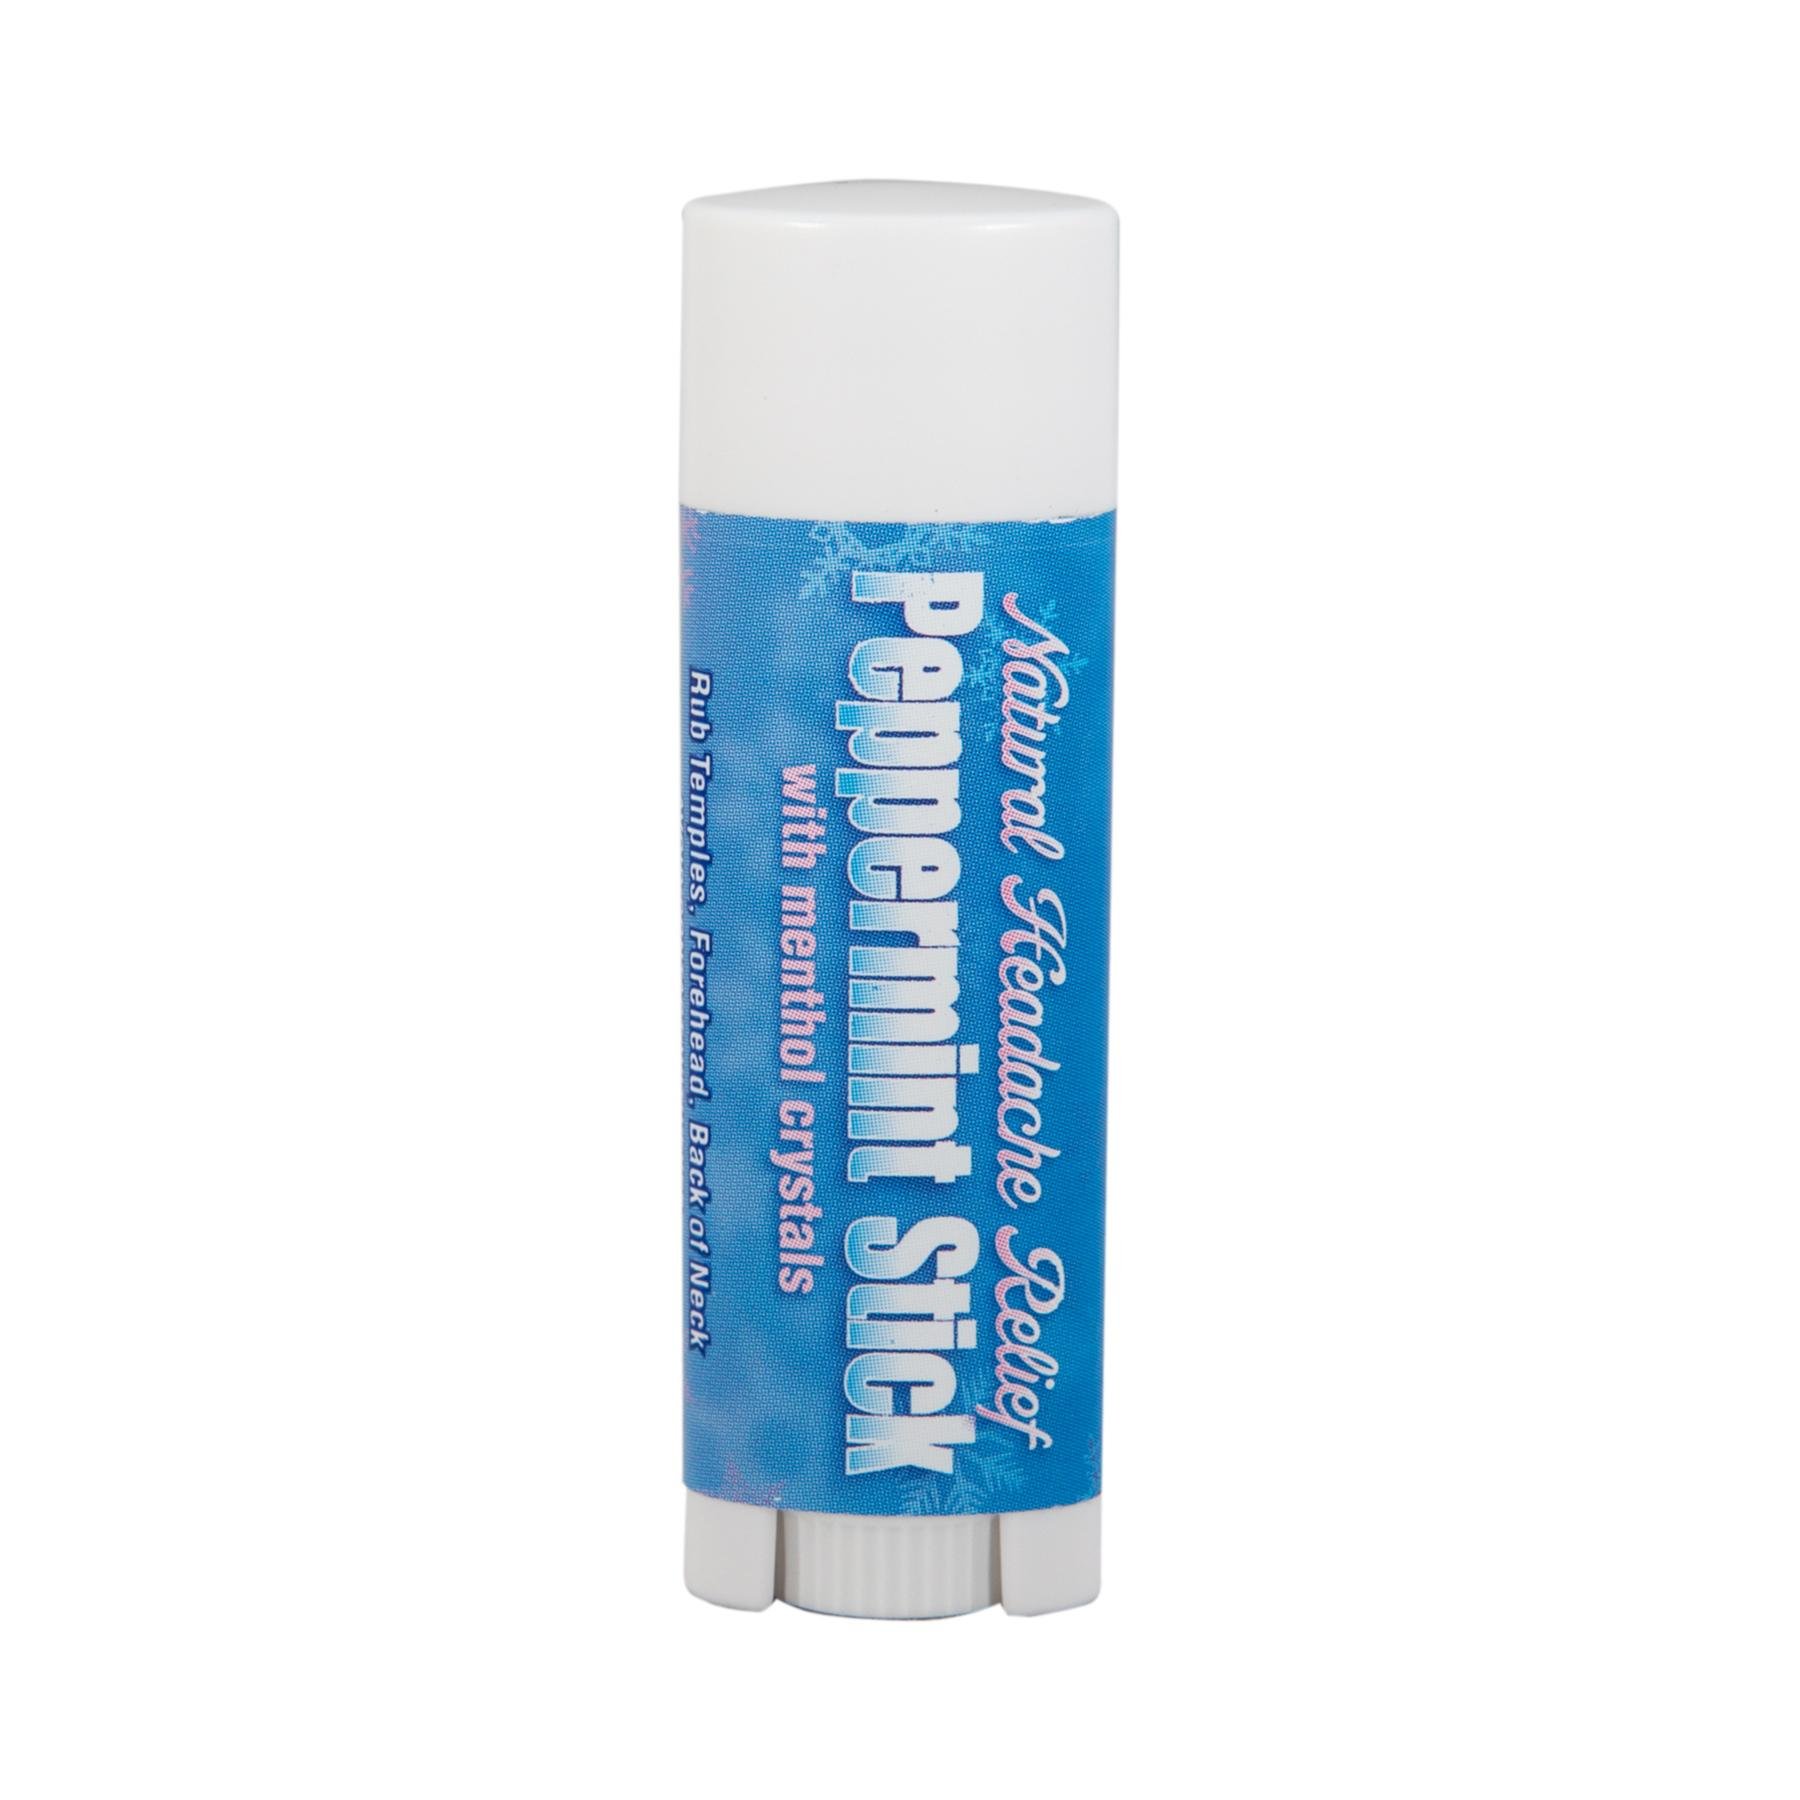 Peppermint Stick Natural Headache Relief